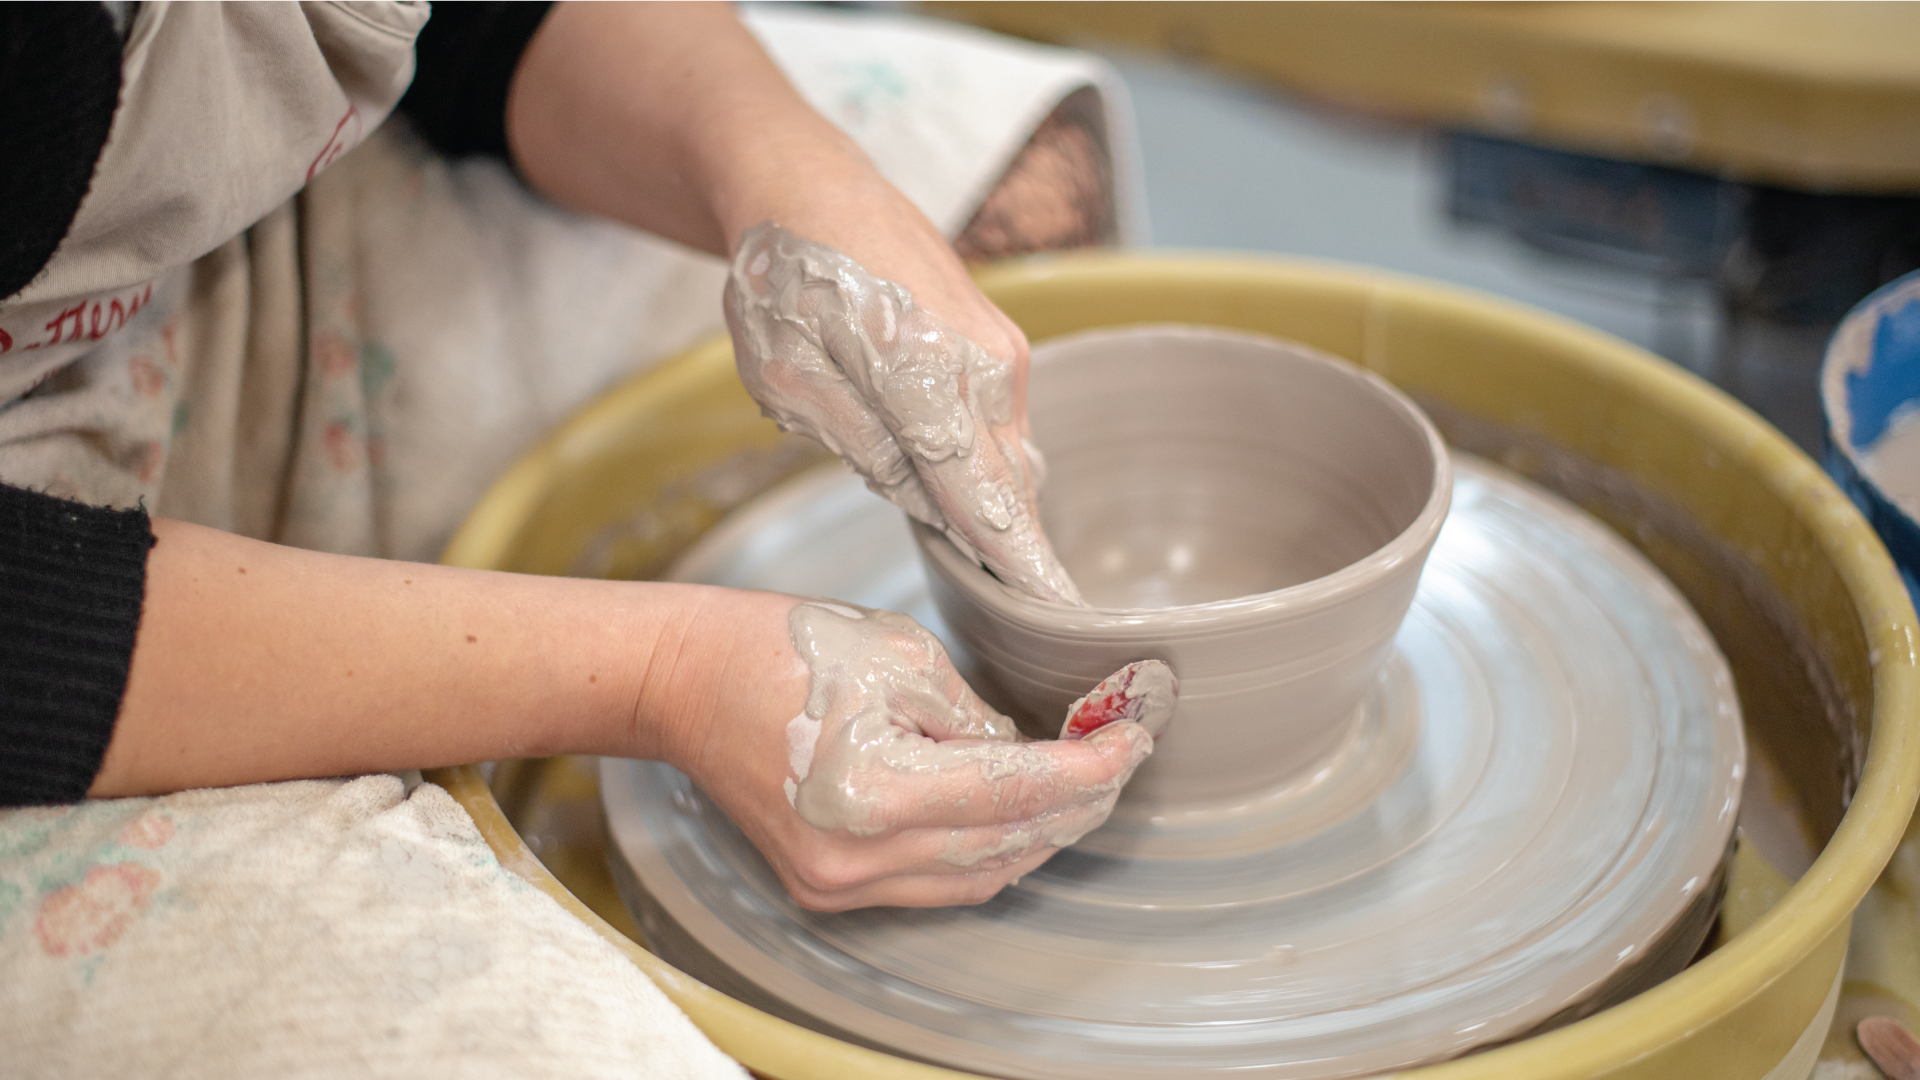 ClayLab Pottery –